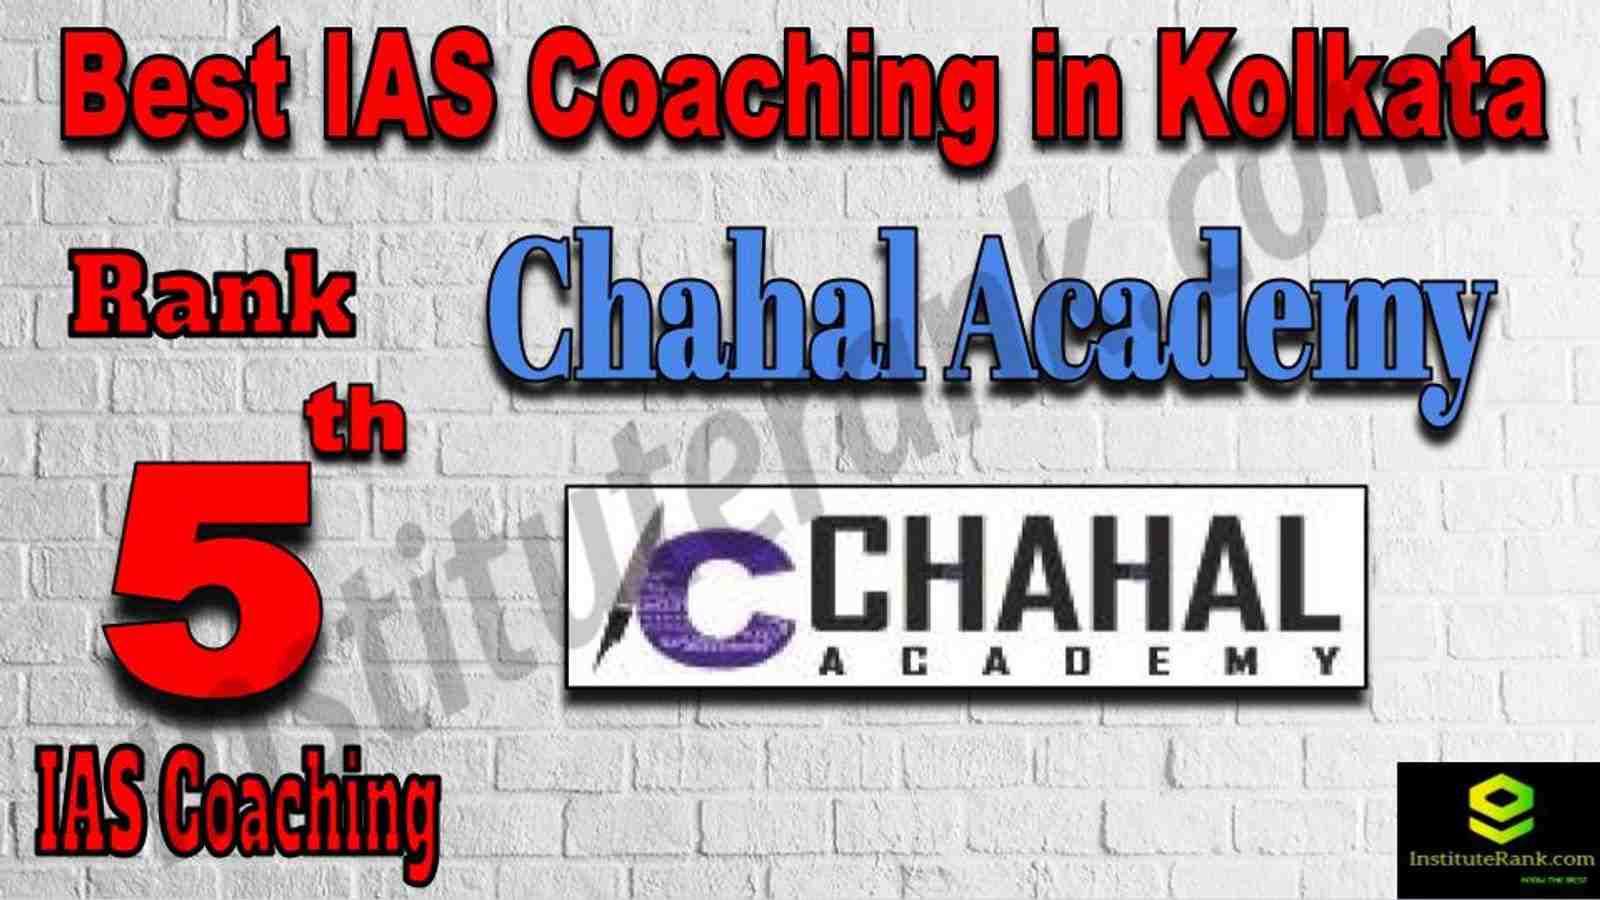 5th Best IAS Coaching in Kolkata